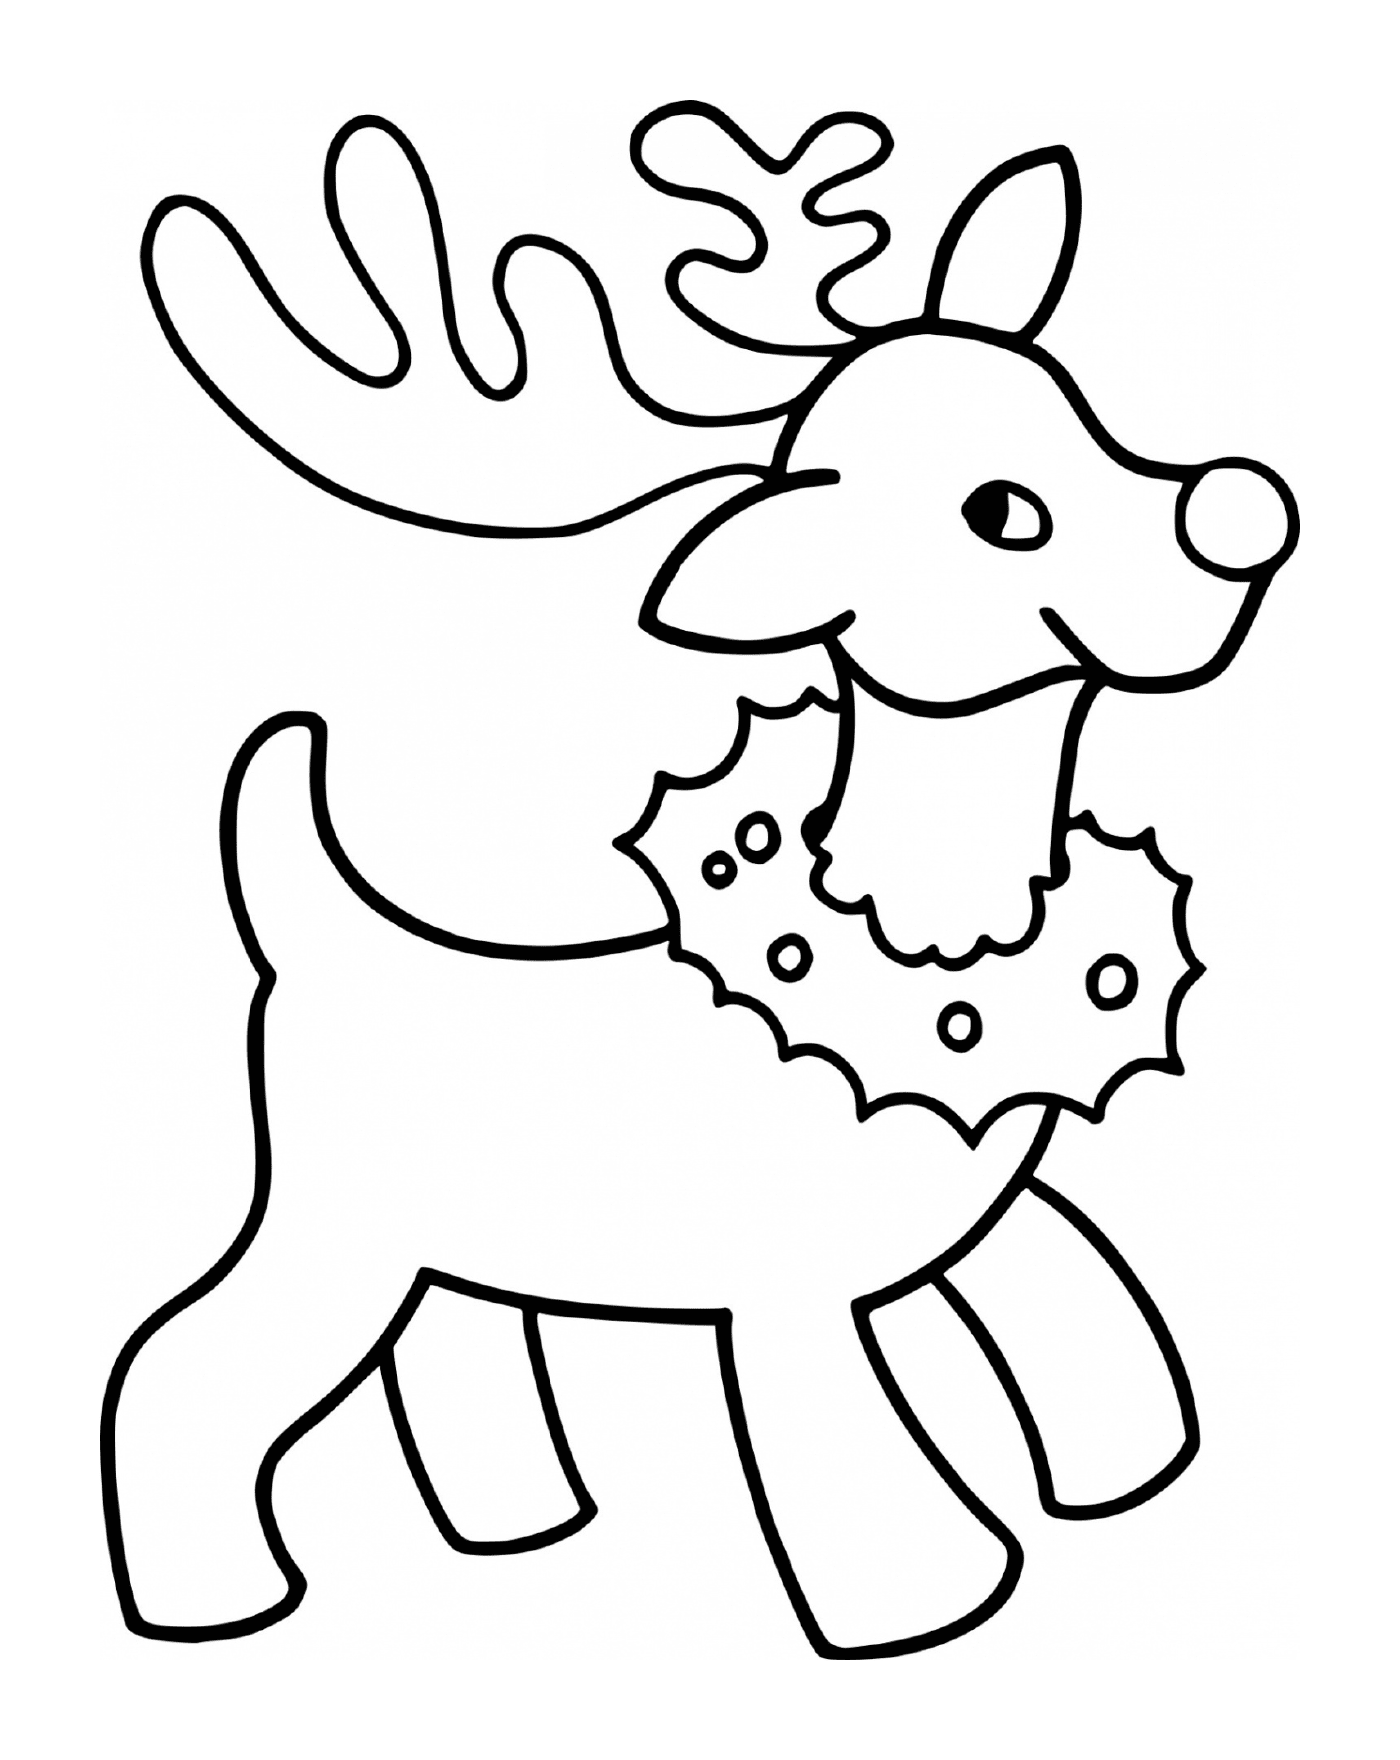  Nice Christmas reindeer 